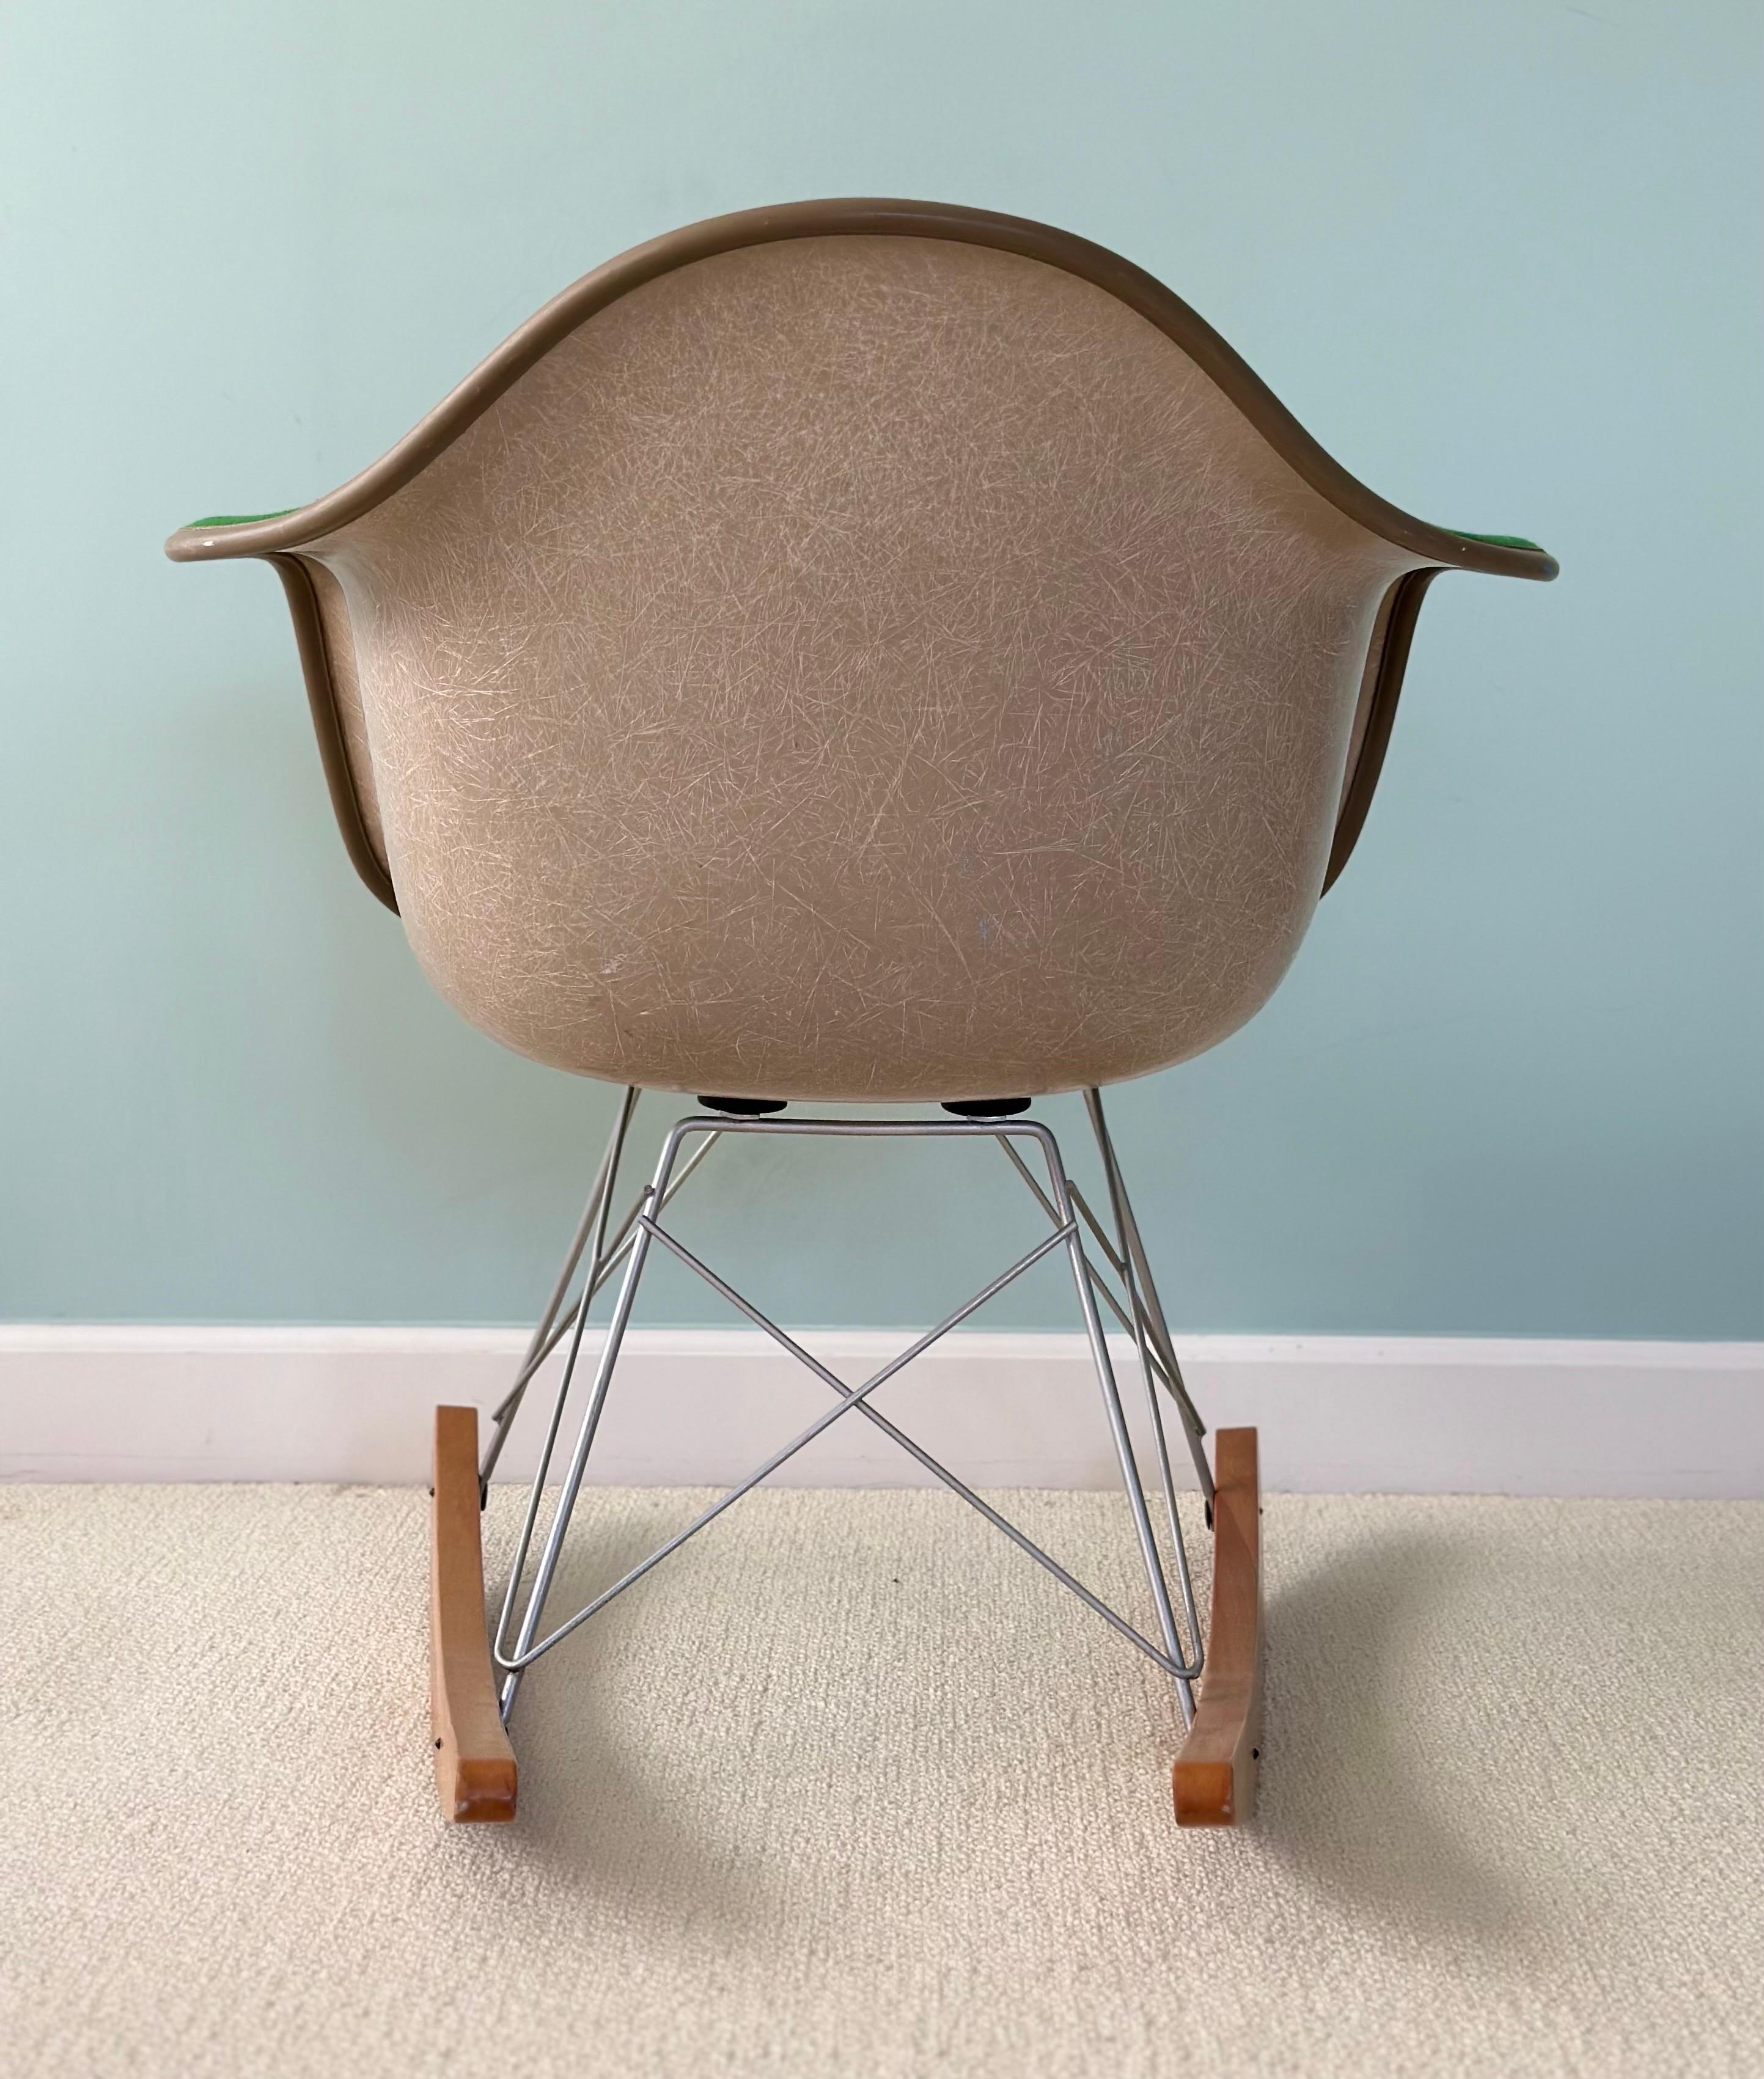 Late 20th Century 1970s RAR Eames for Herman Miller Fiberglass and Green Upholstery Rocker Chair  For Sale